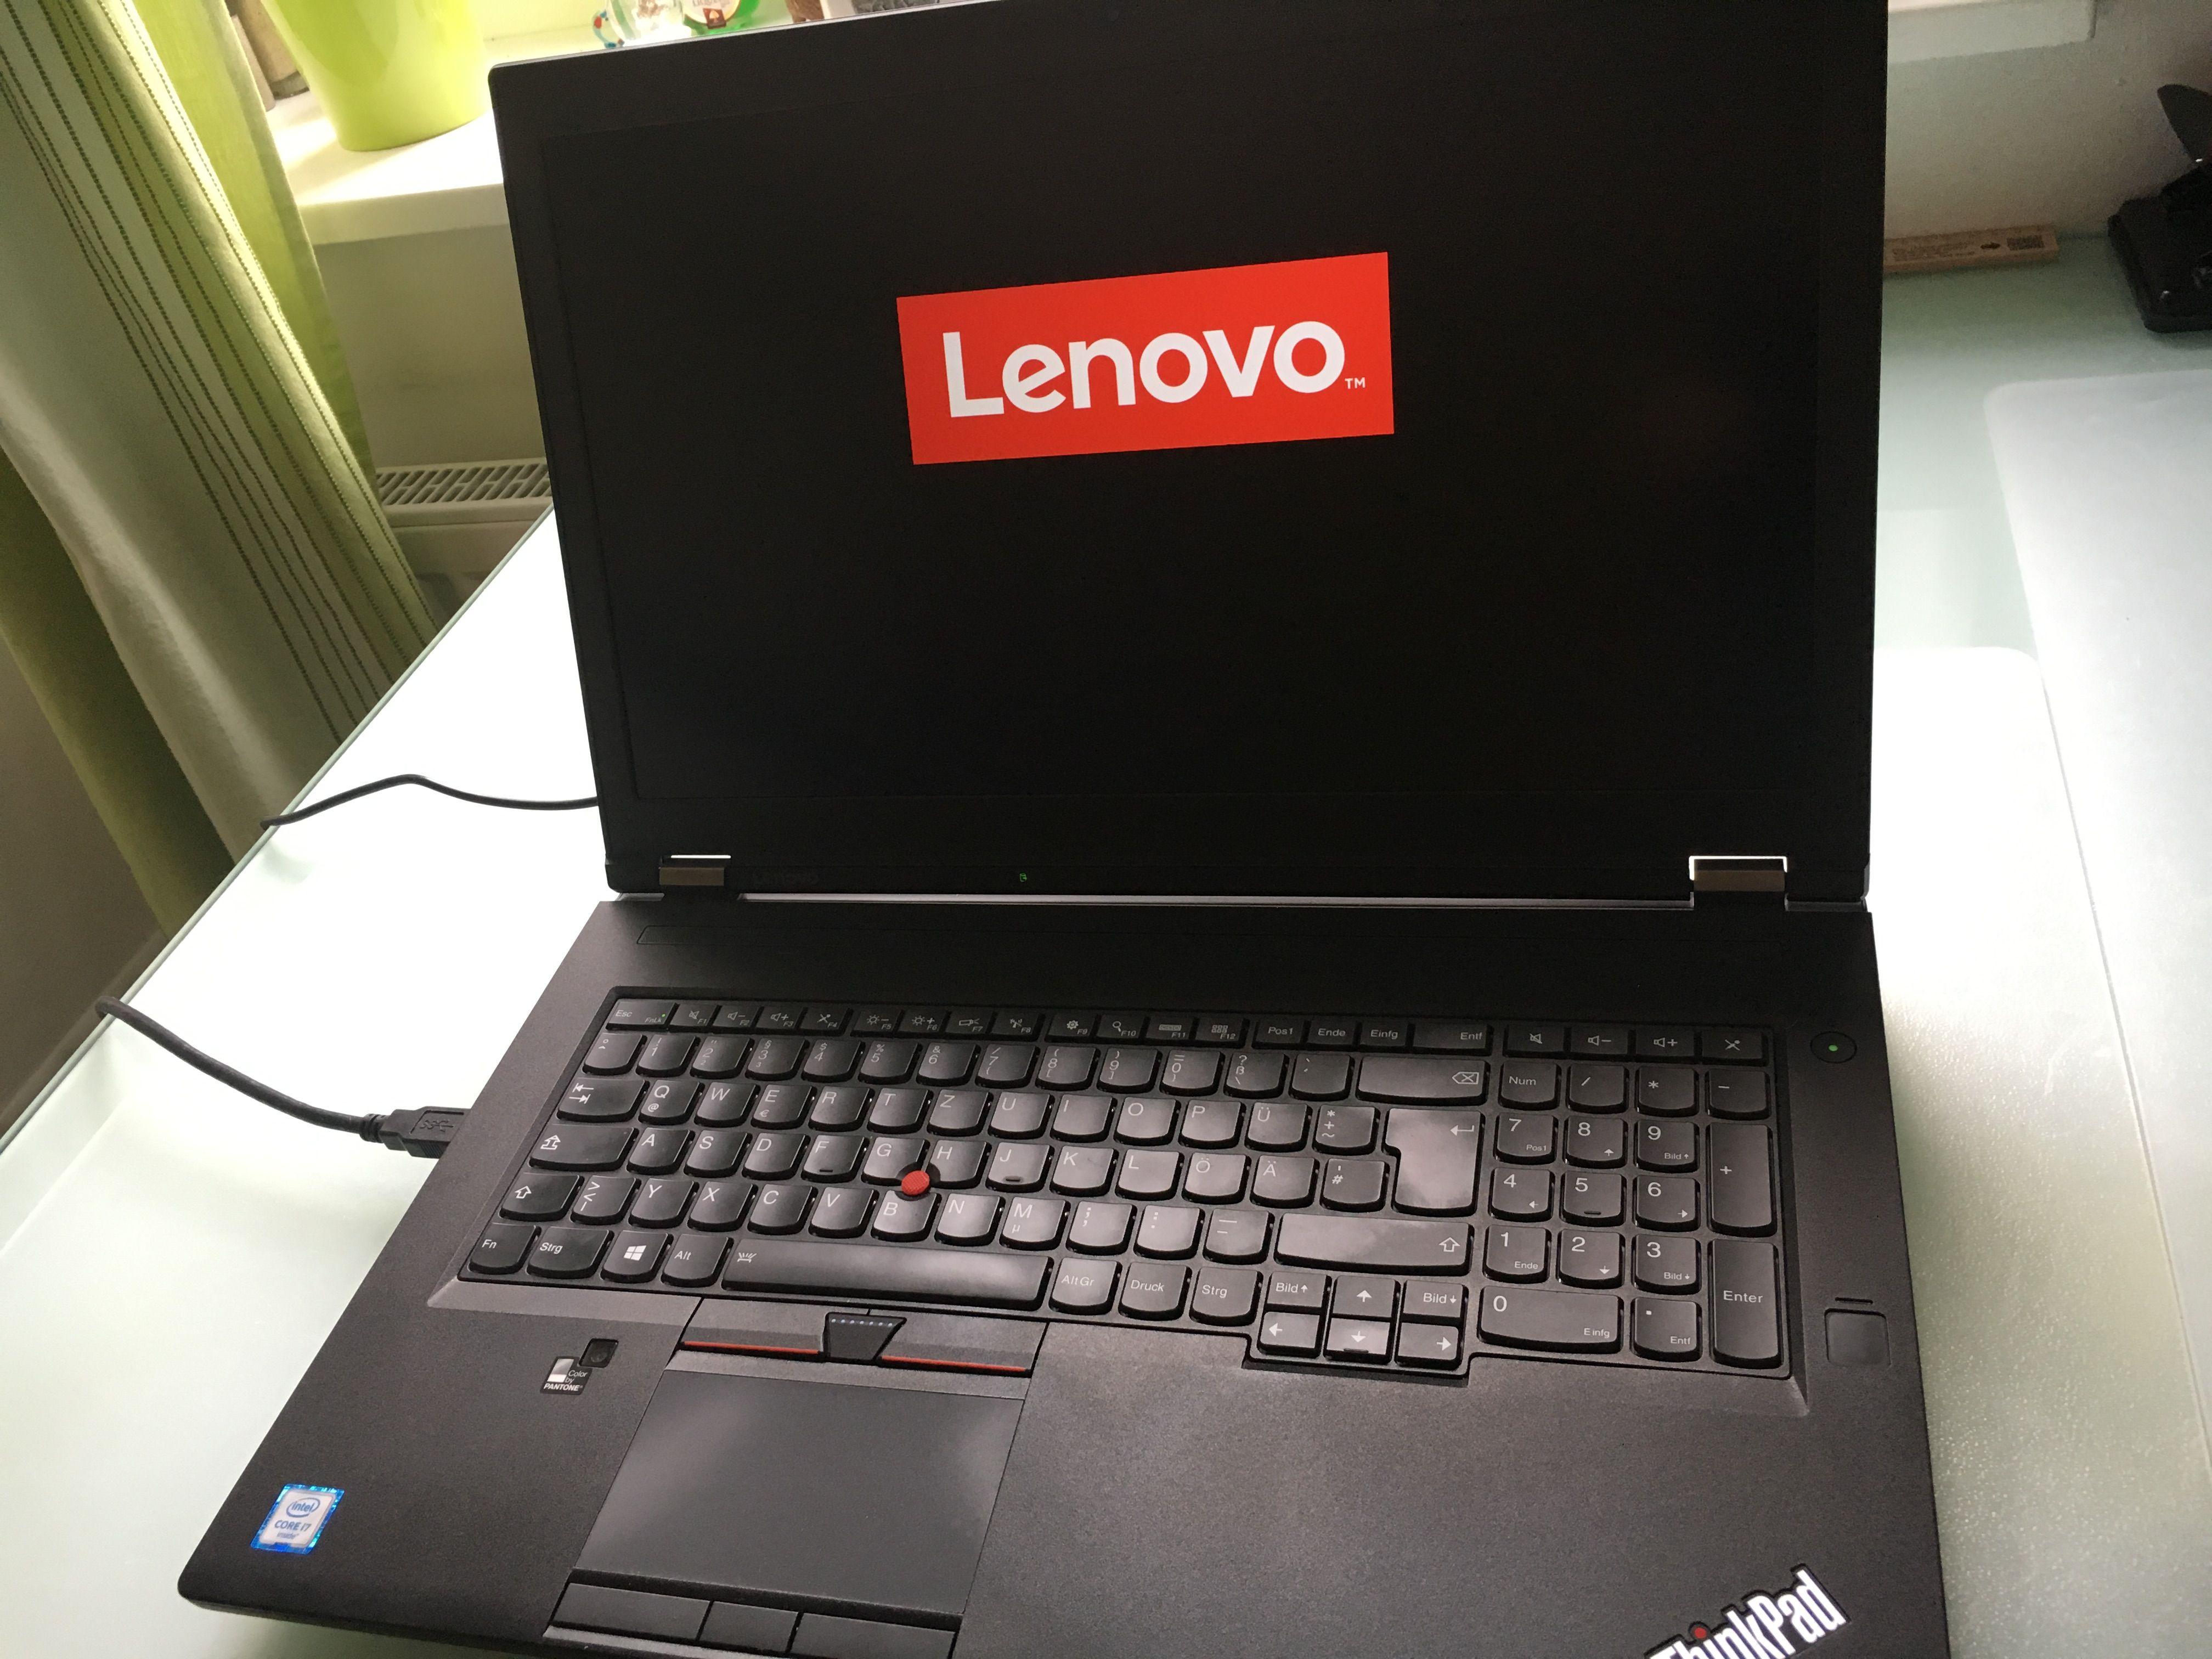 Red Lenovo Logo - Lenovo stuck on Logos